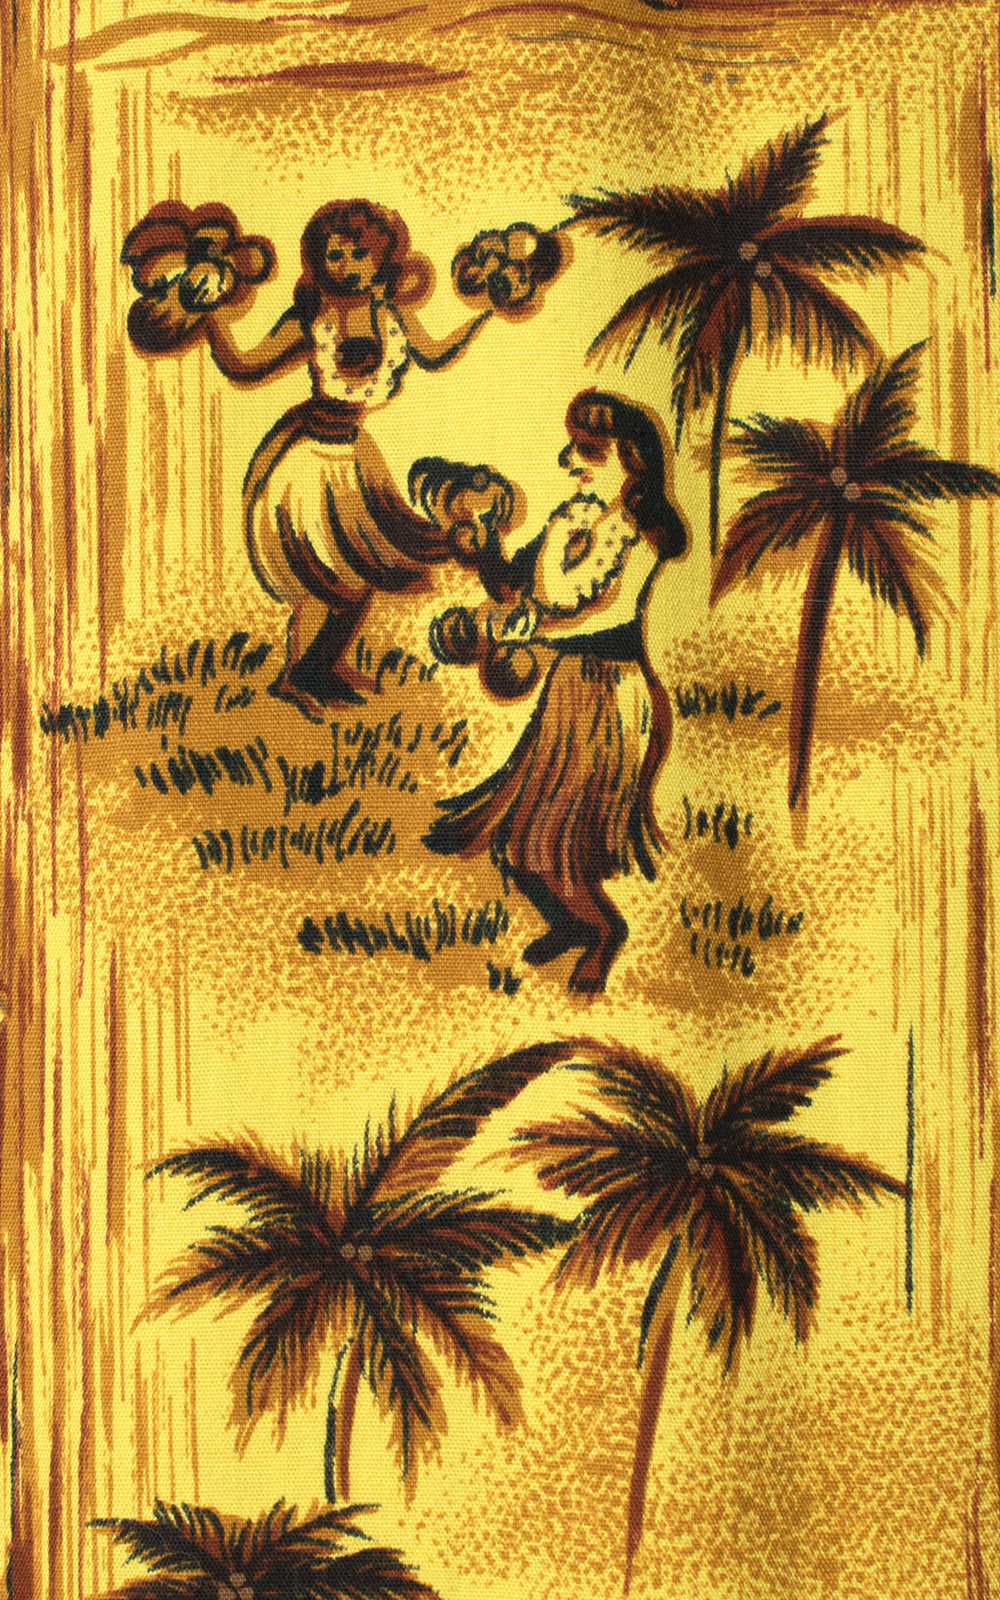 1950s Hawaiian Novelty Print Yellow Cotton Top